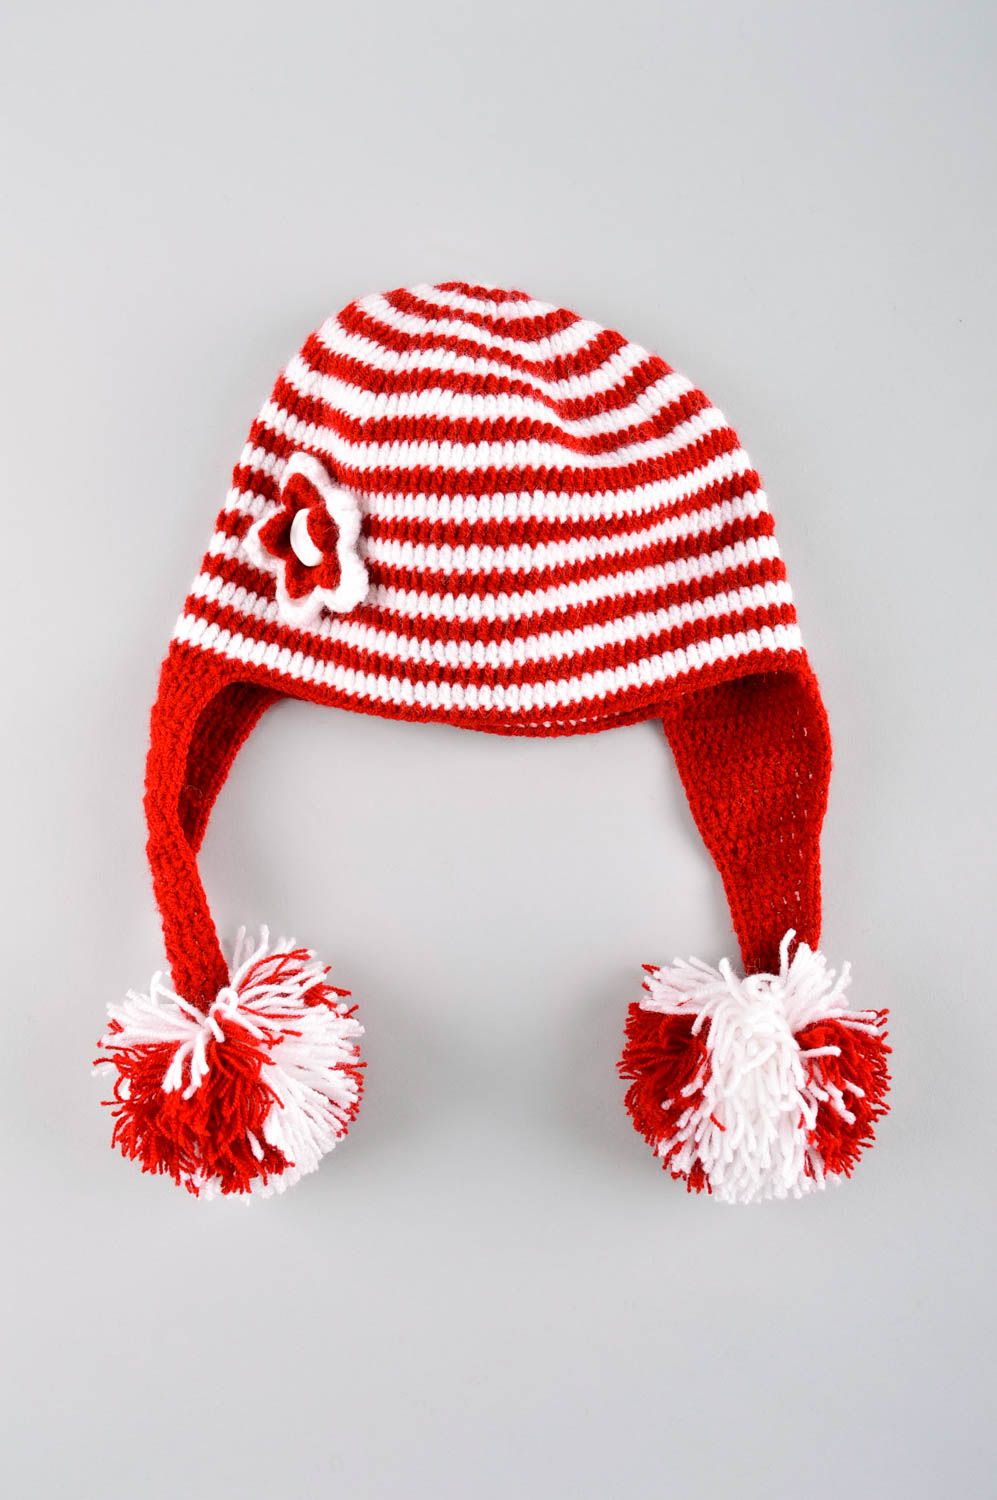 Handmade hat designer cap unusual warm hat cap for children gift ideas photo 5